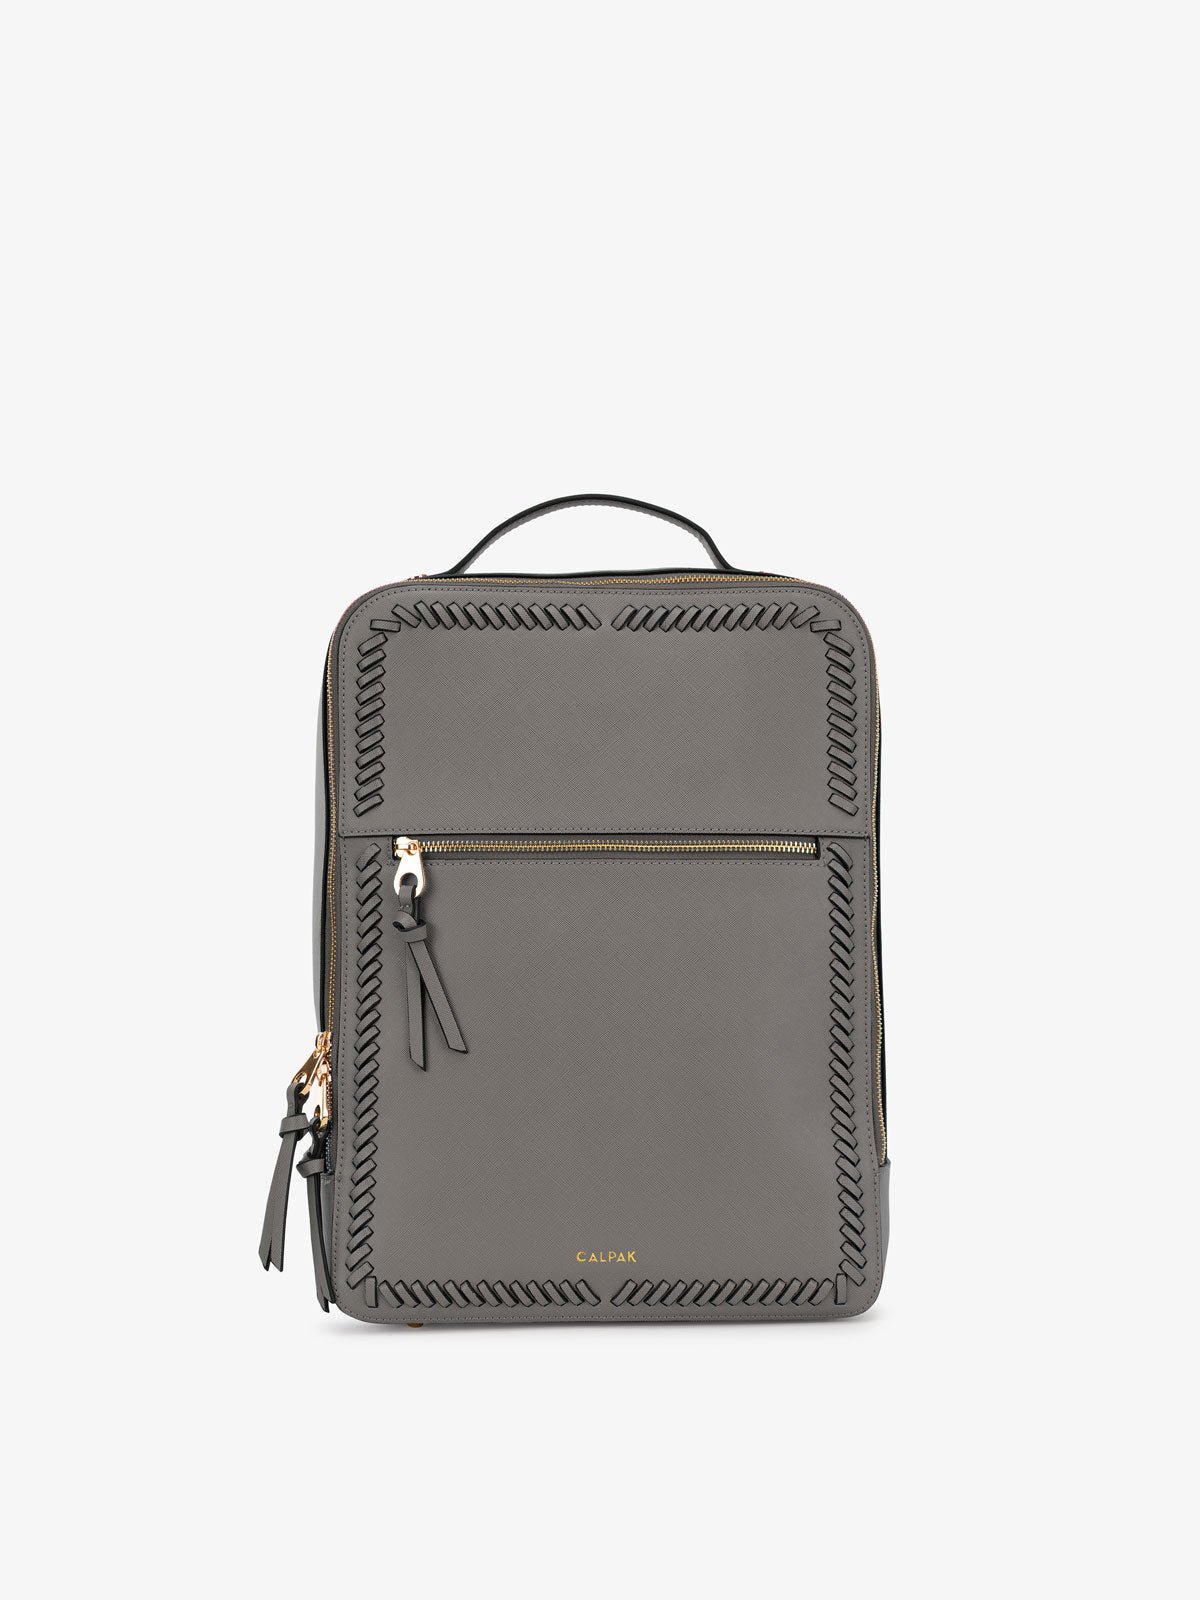 CALPAK Kaya laptop backpack in charcoal grey